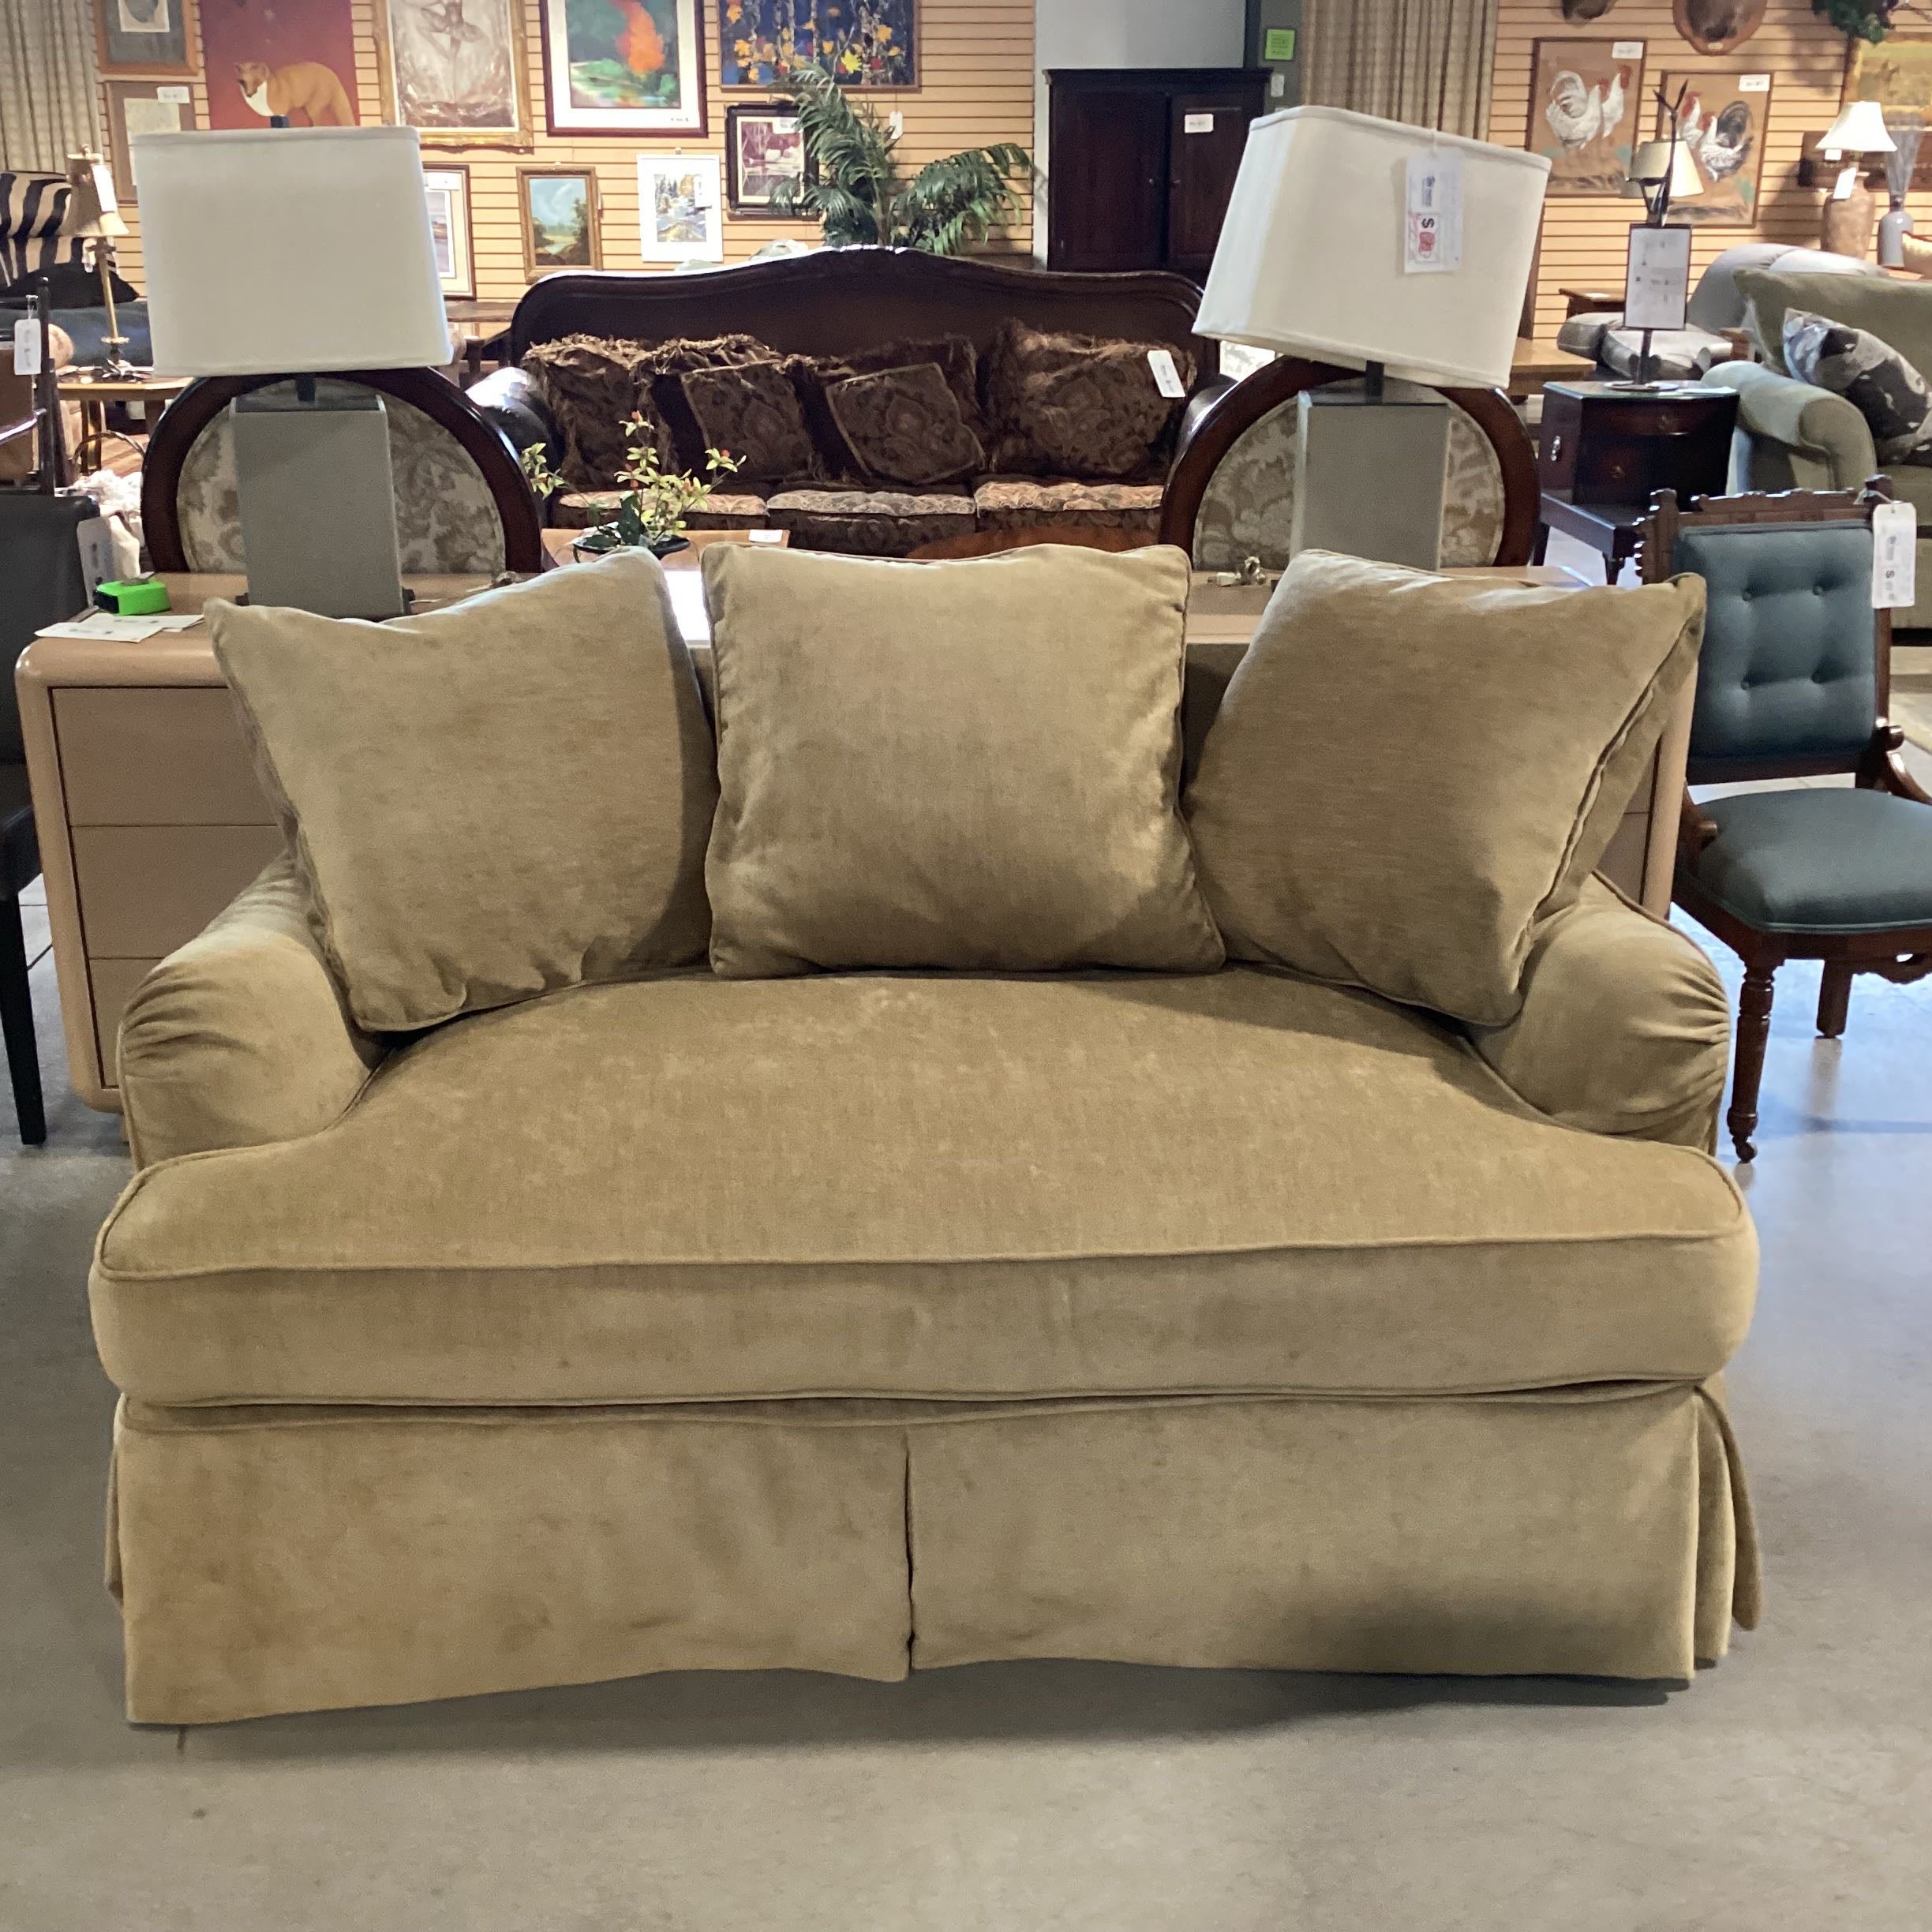 Quatrine Washable Furniture Golden Slipcovered Loveseat Sofa